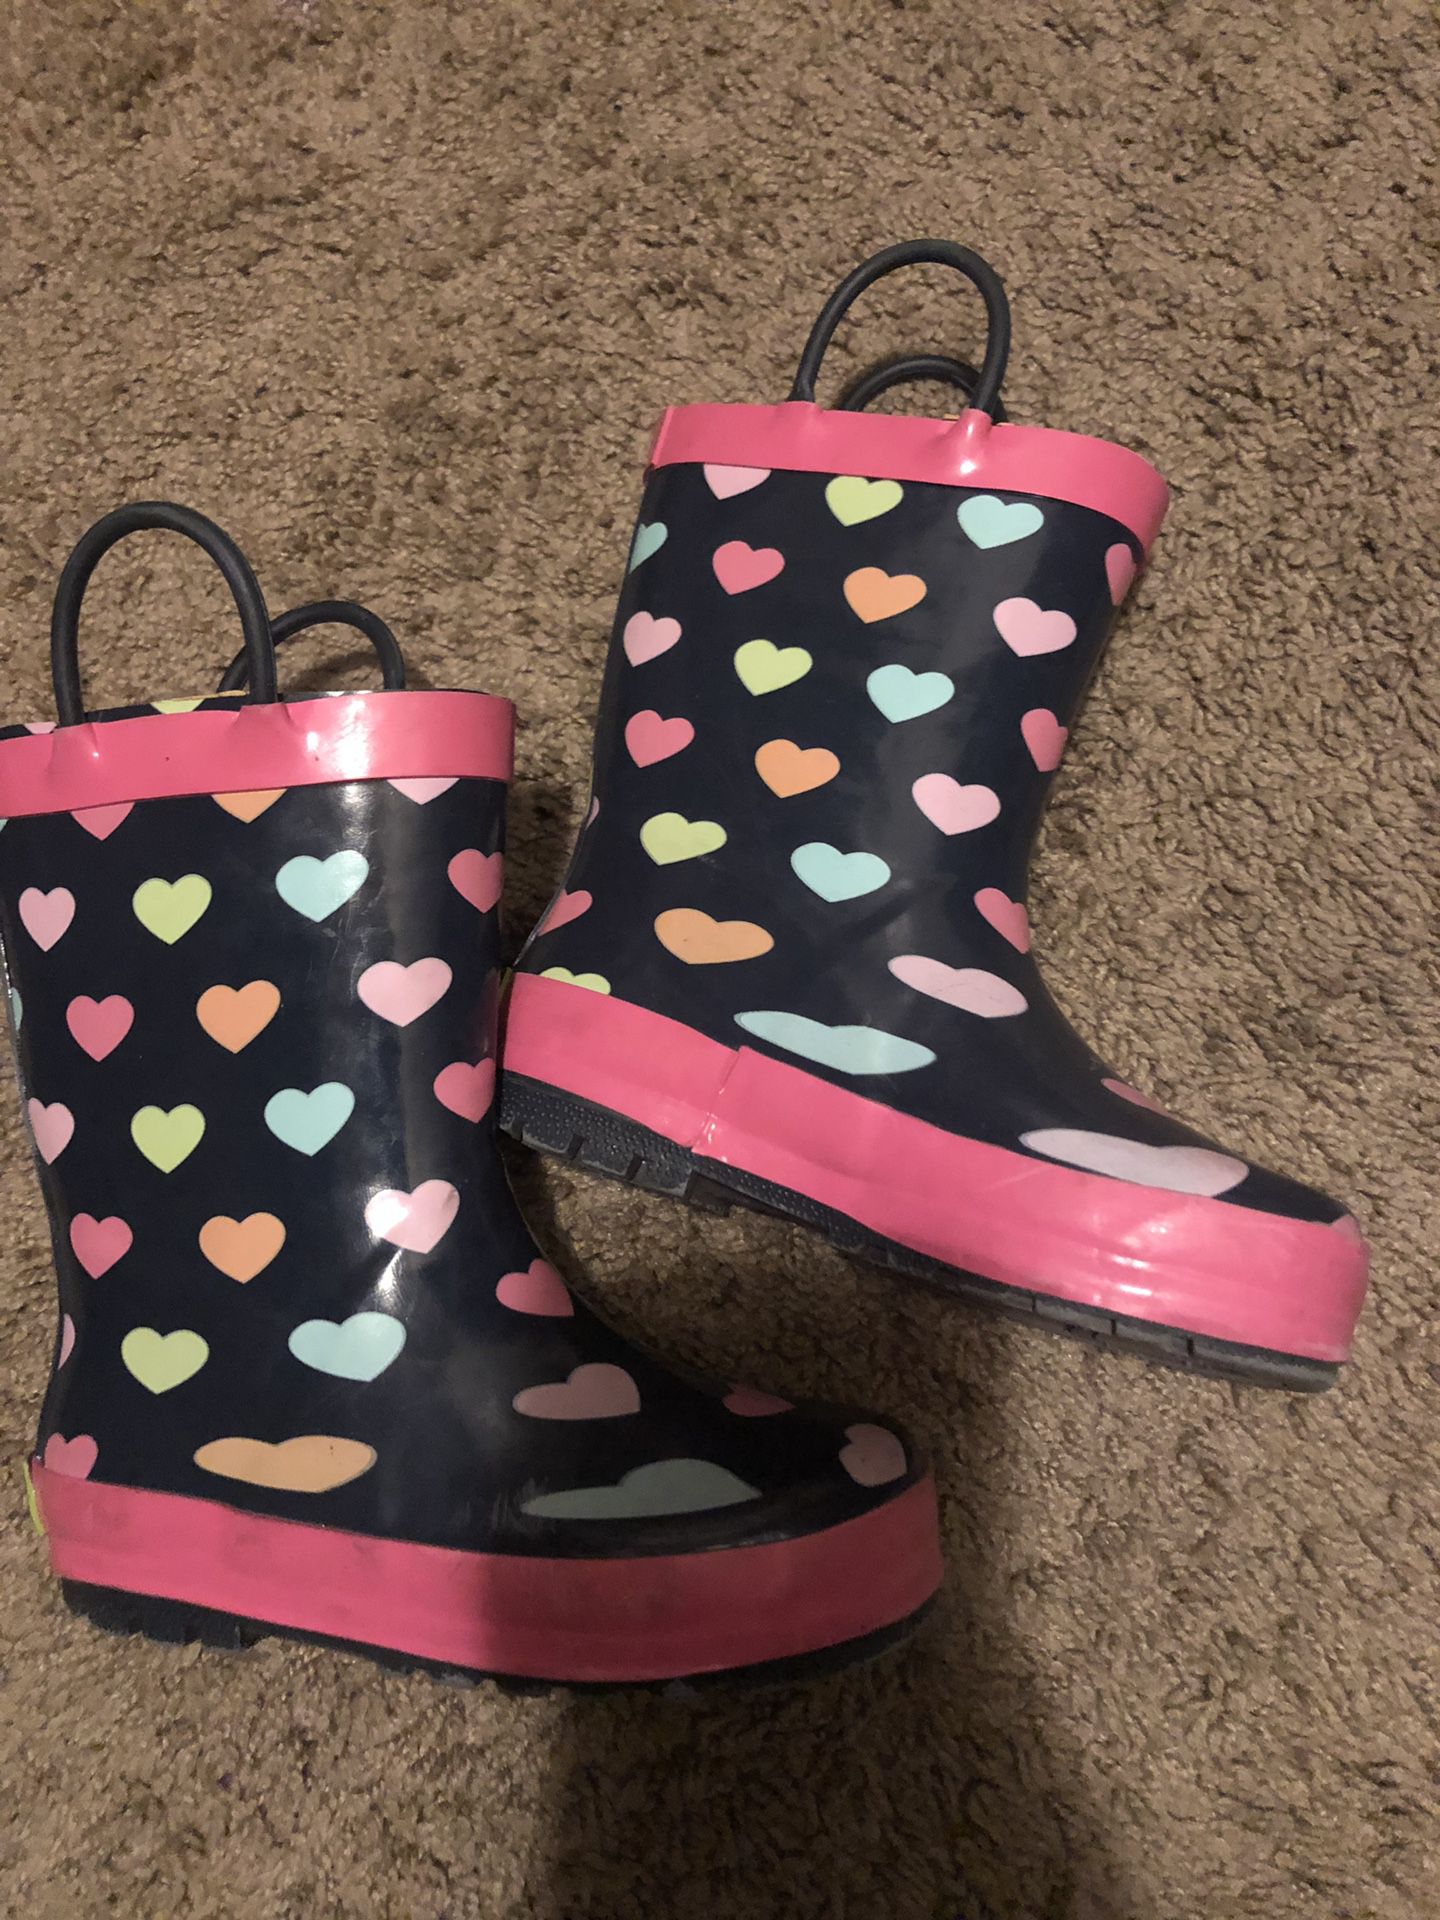 Toddler rain boots 9/10